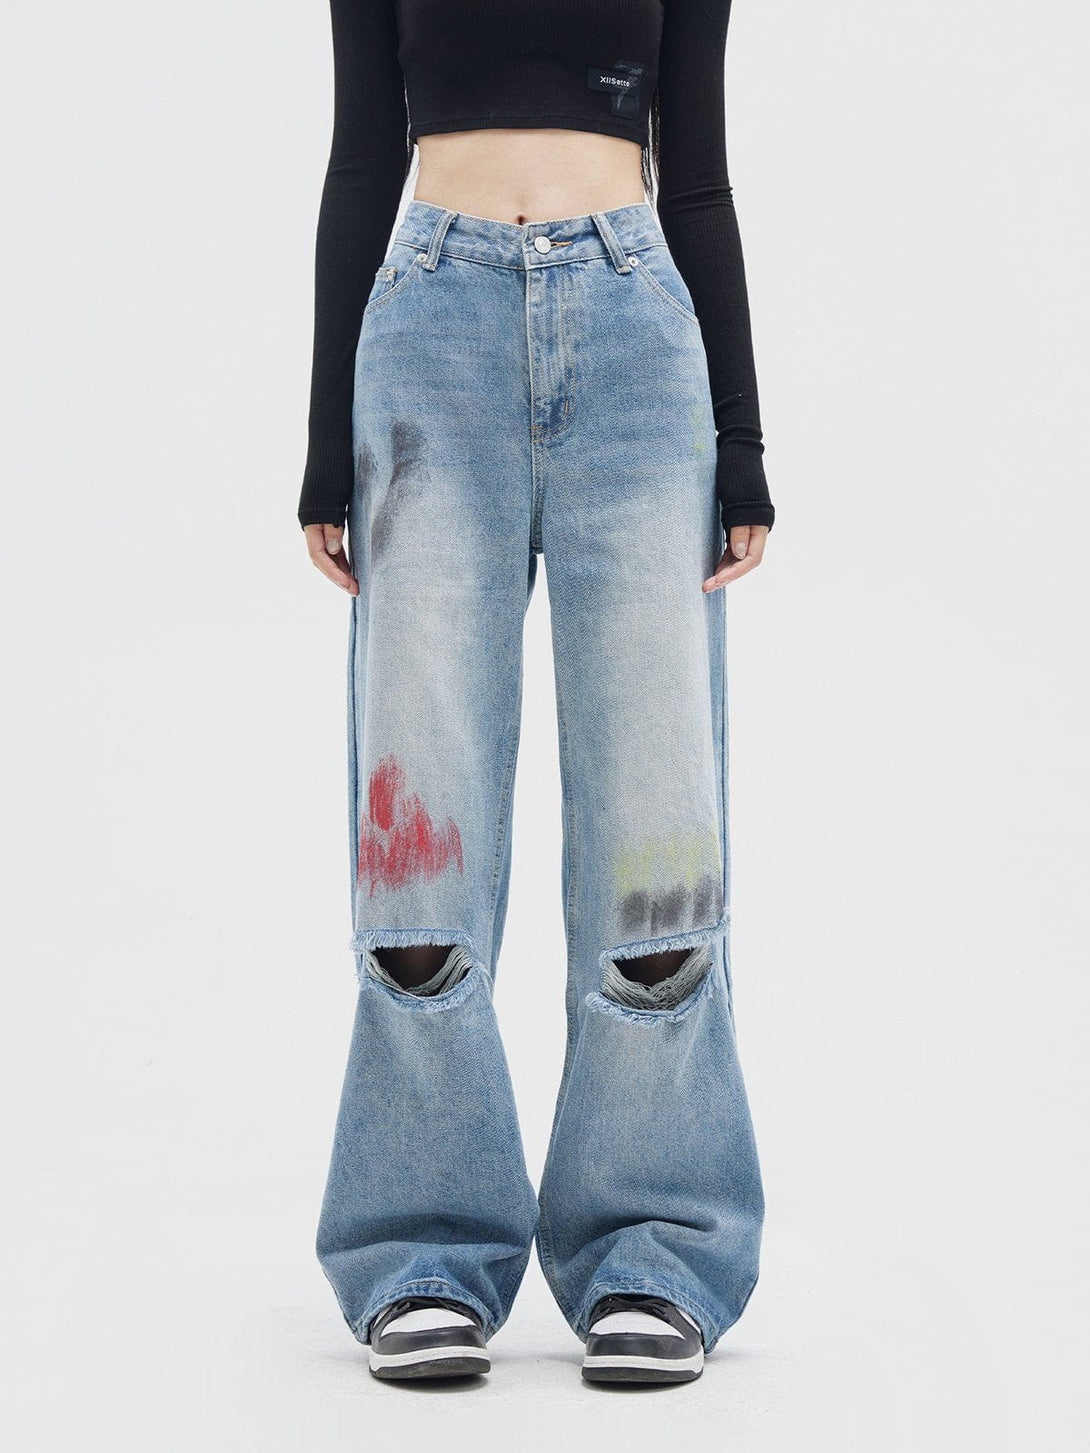 Graffiti Distressed Jeans – Aelfric eden